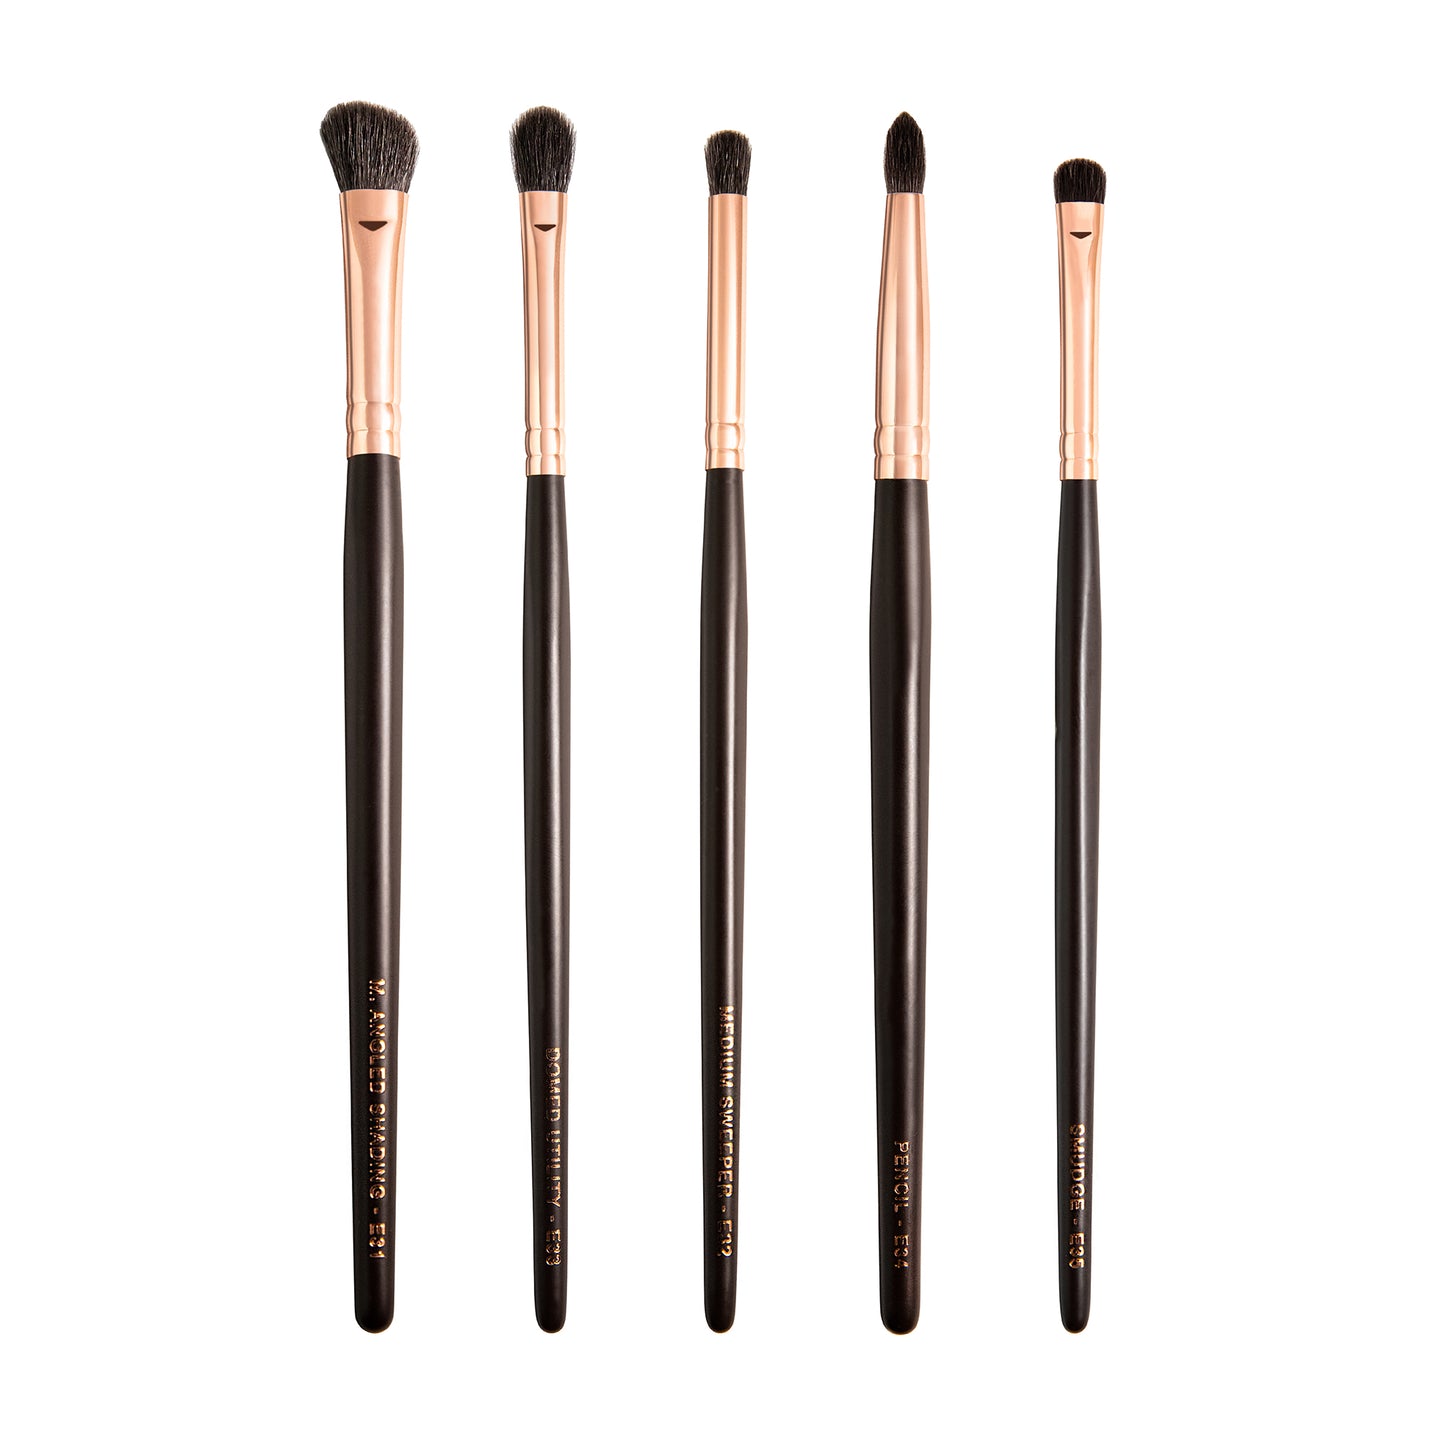 頂級灰鼠混羊毛眼部刷具5入組 / 眼影刷組 Rose Gold Makeup Brushes Set/ pro eyeshadow brush 